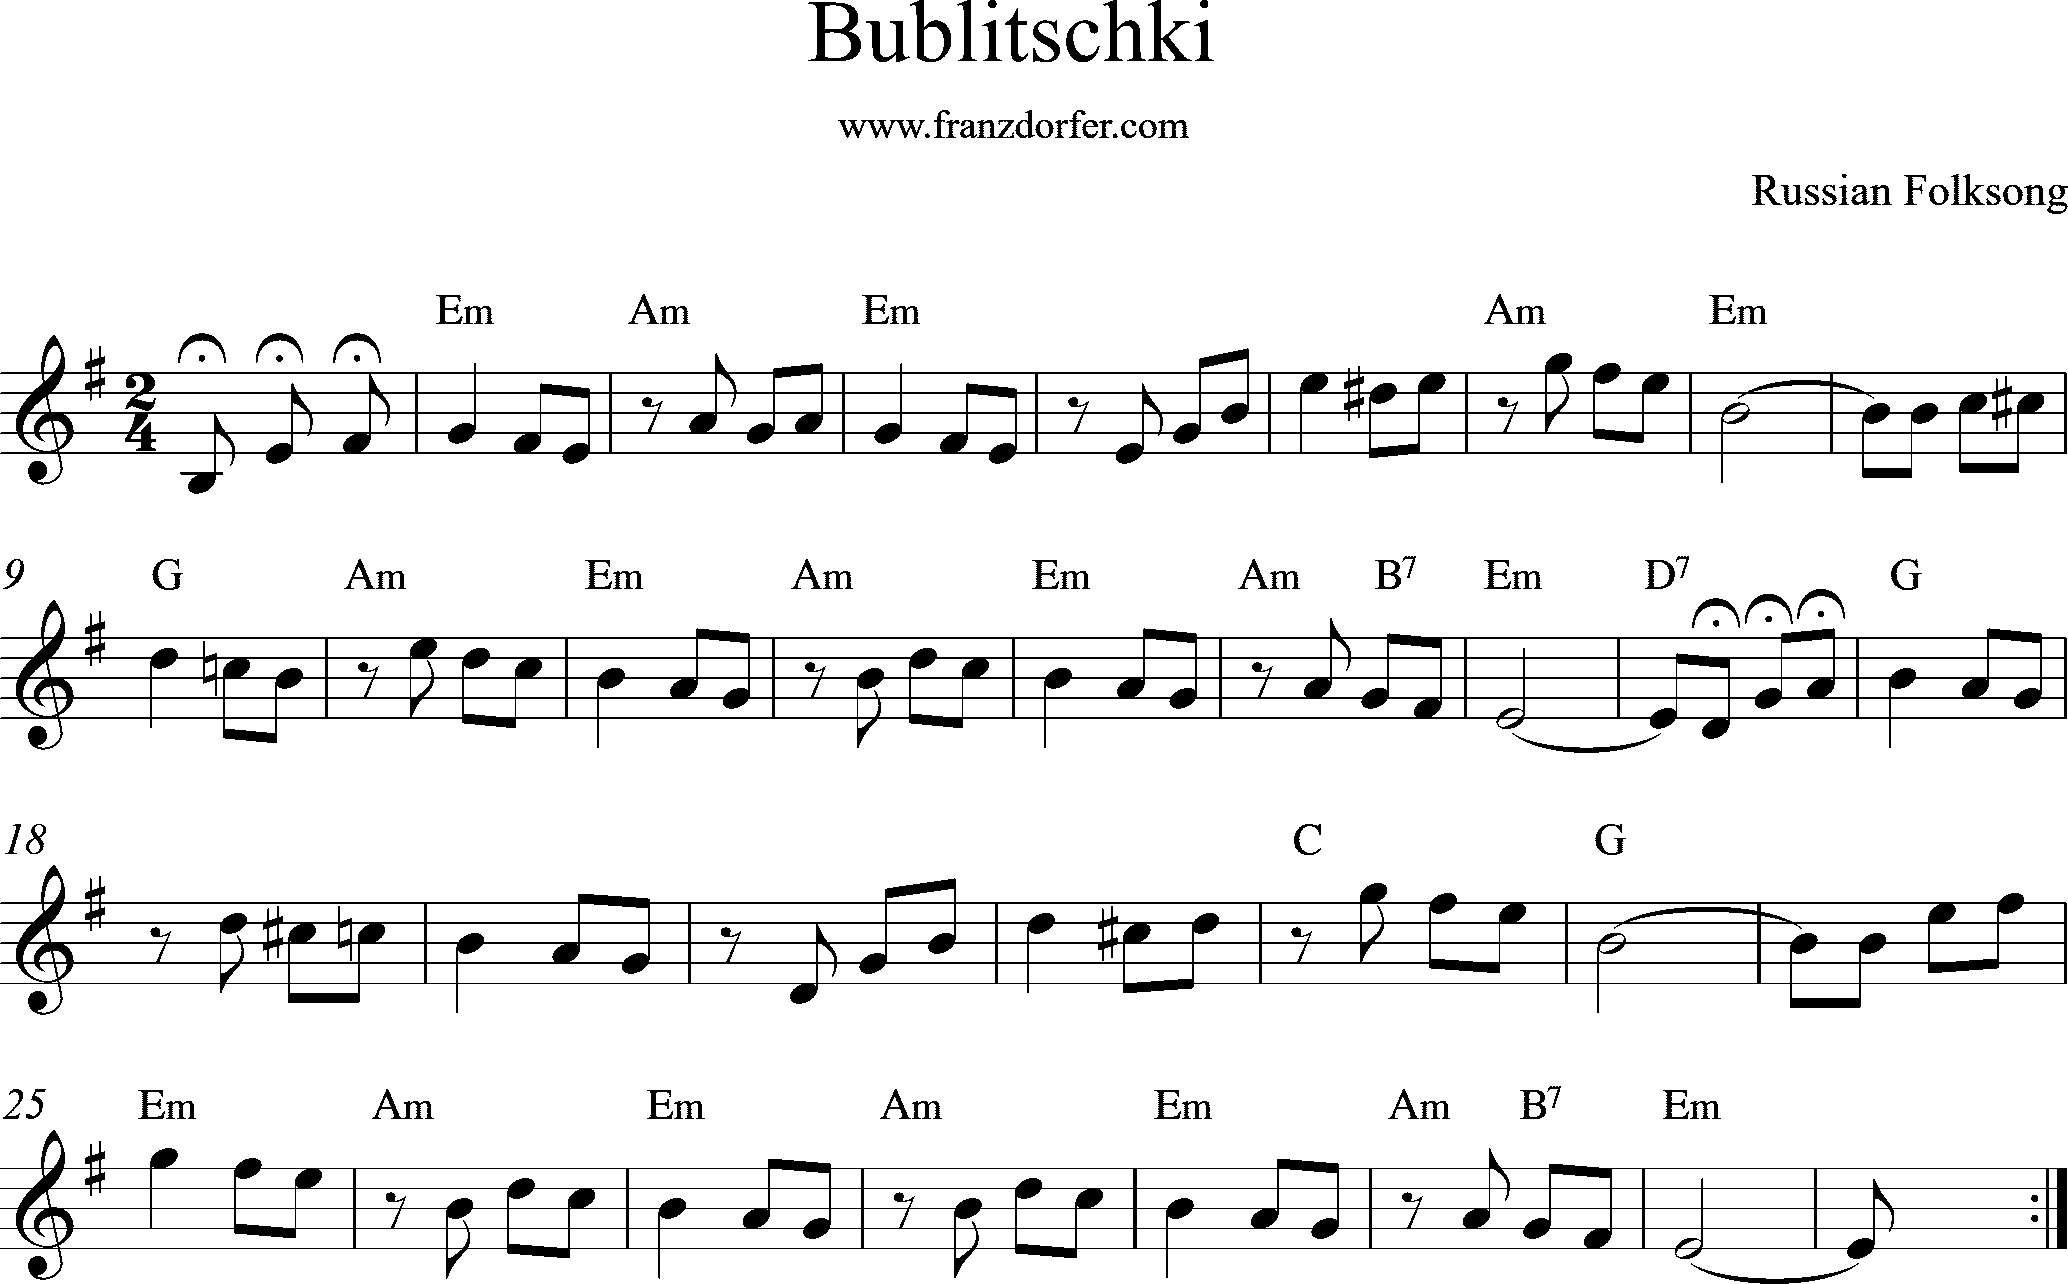 Sheetmusic, Bublitschki